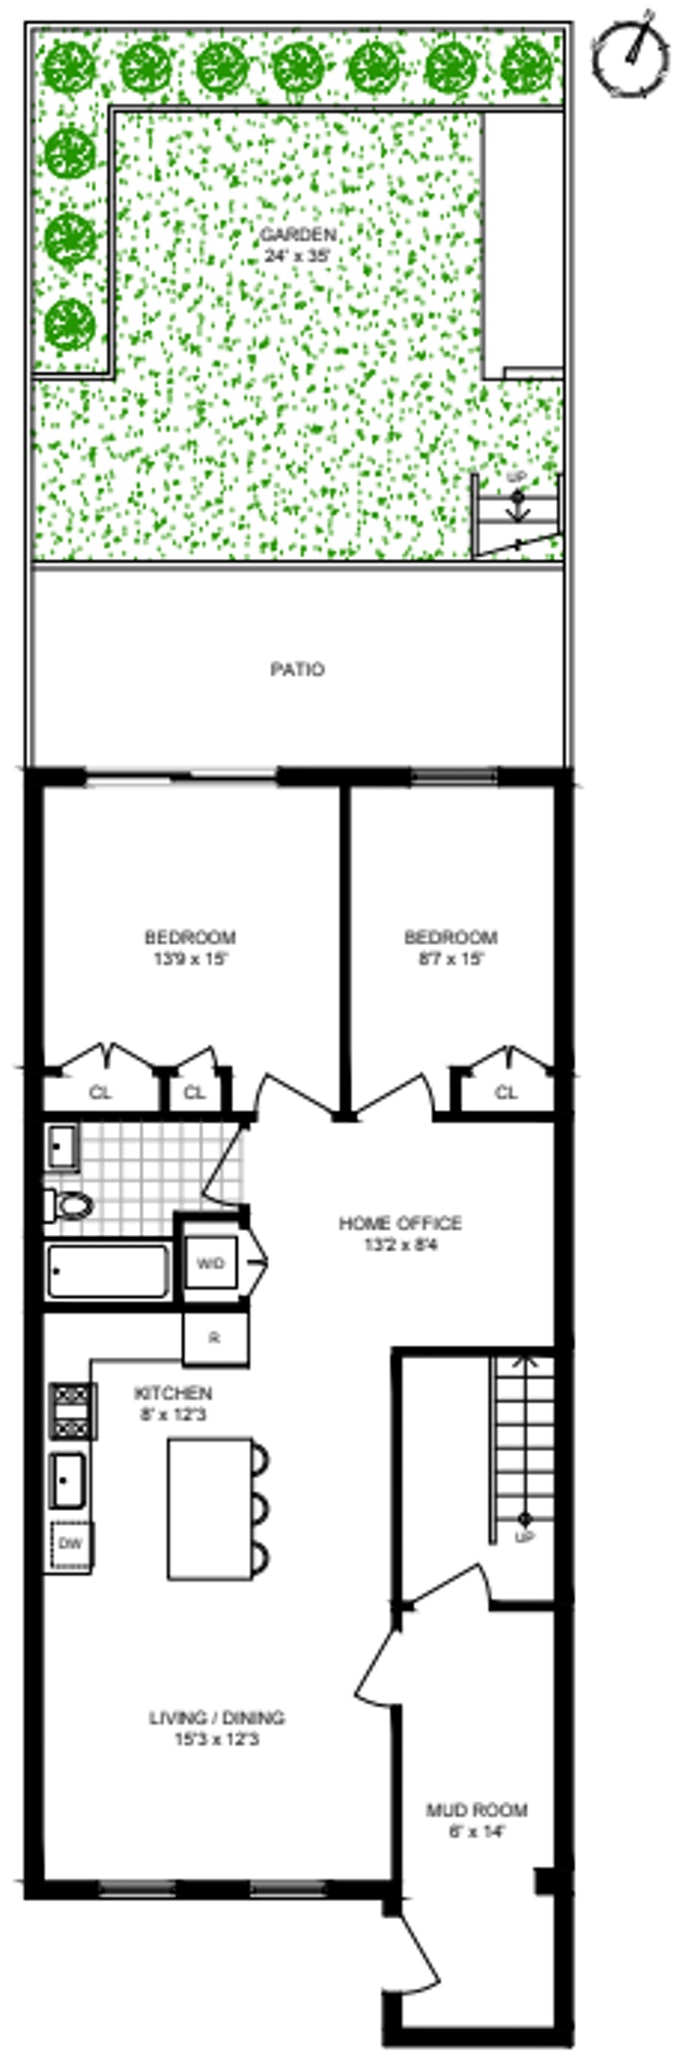 Floorplan for 303 Gates Avenue, 1